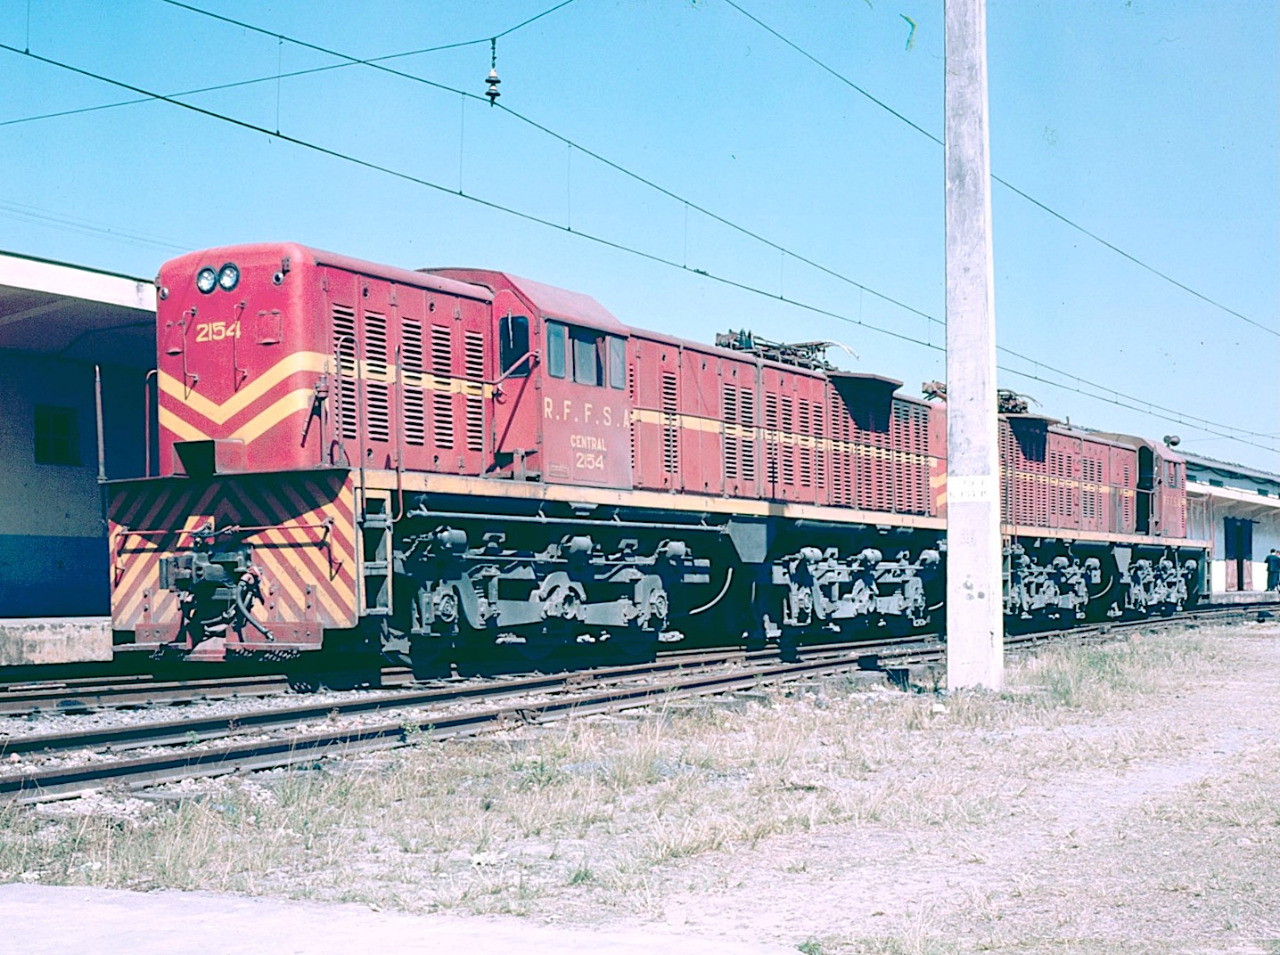 Train R F F S A Locomotive Diesel Locomotive 1280x955